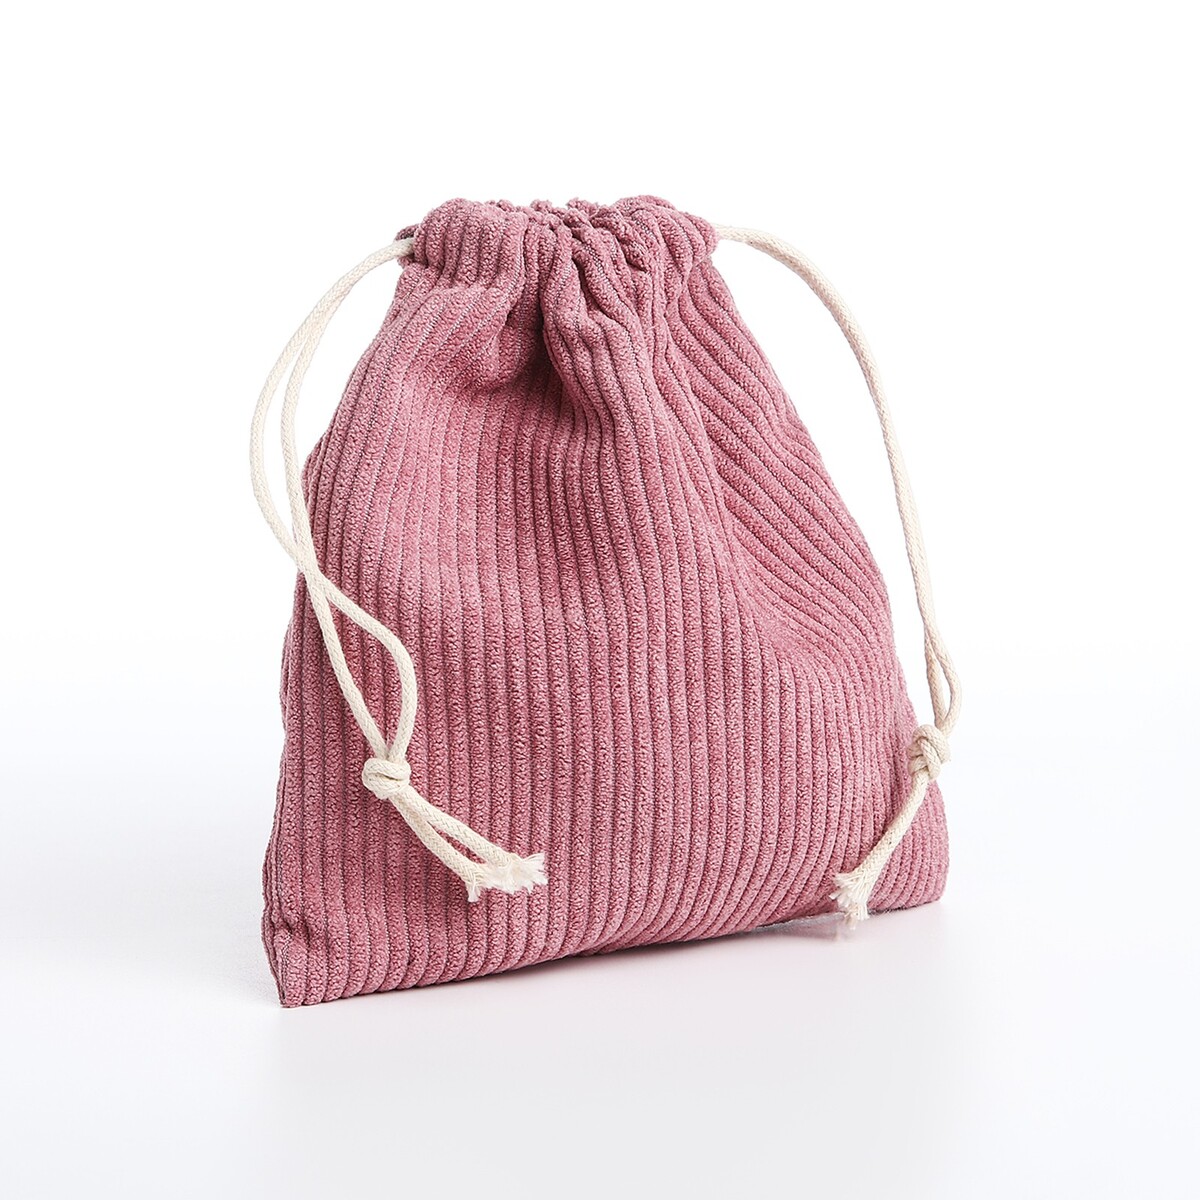 Косметичка - мешок с завязками, цвет сиренево-розовый косметичка мешок с завязками сиренево розовый